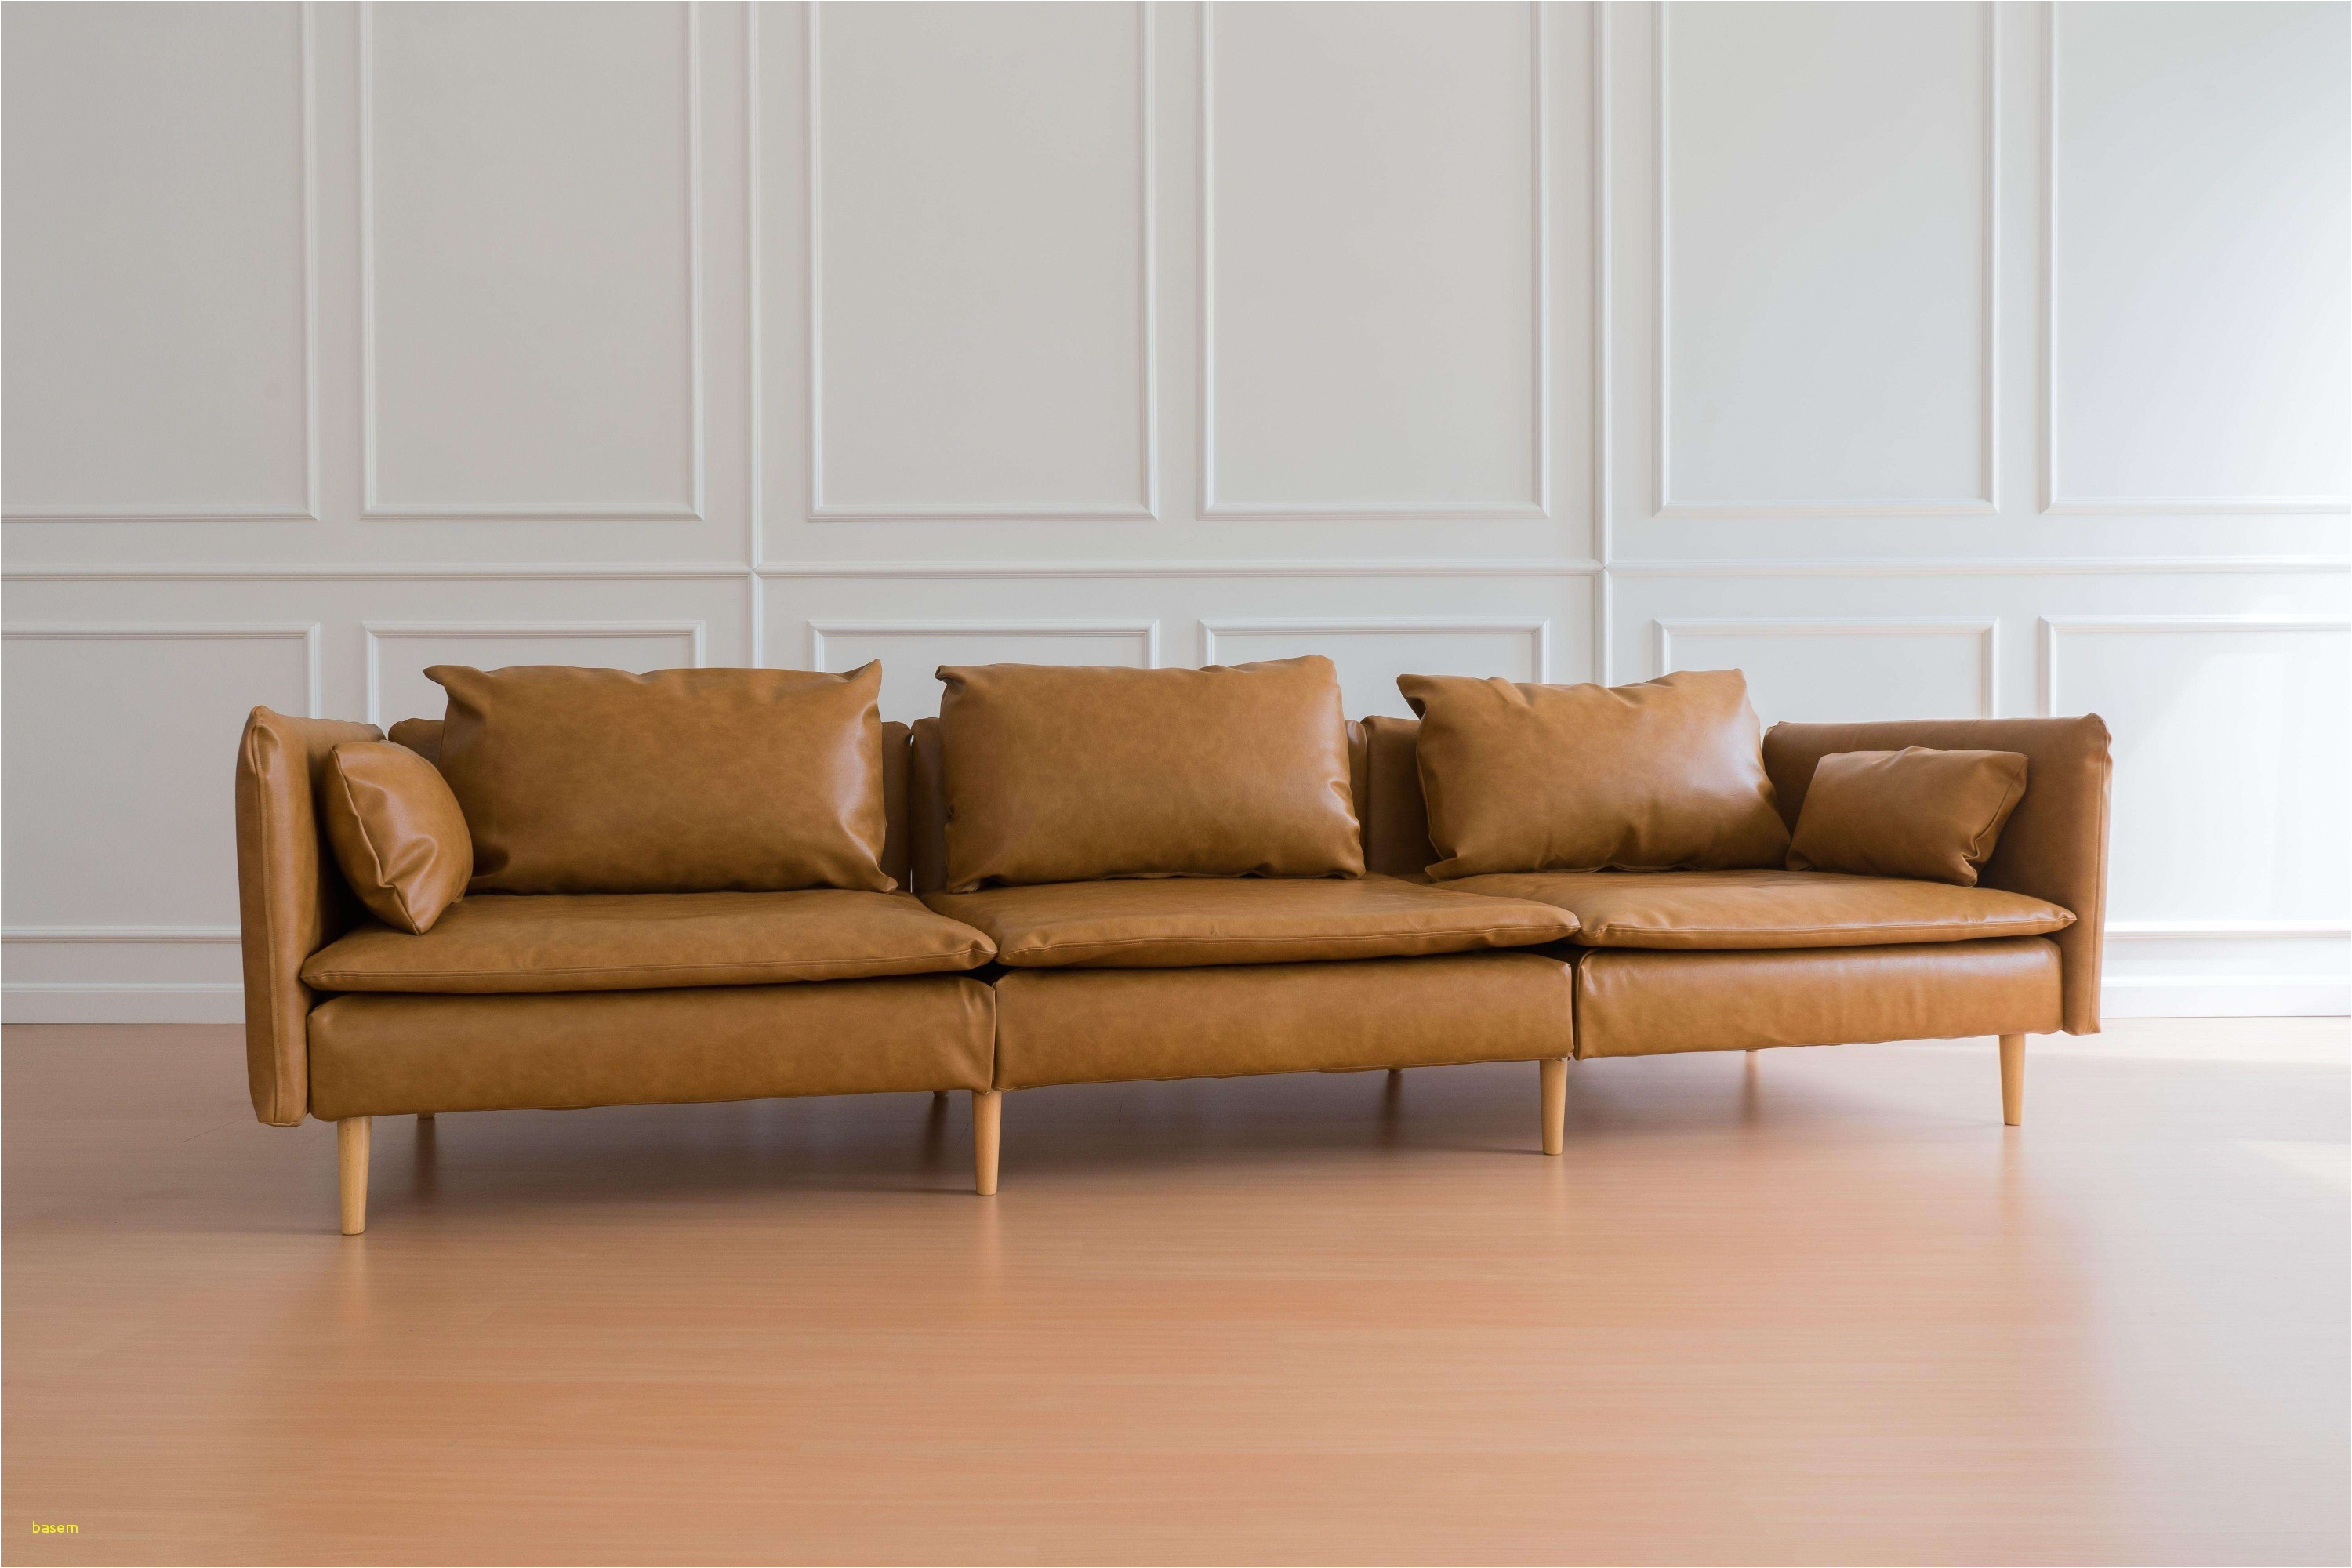 boxspring schlafsofa test elegant uncategorized sofa test auch schon 51 inspirational ikea norsborg foto